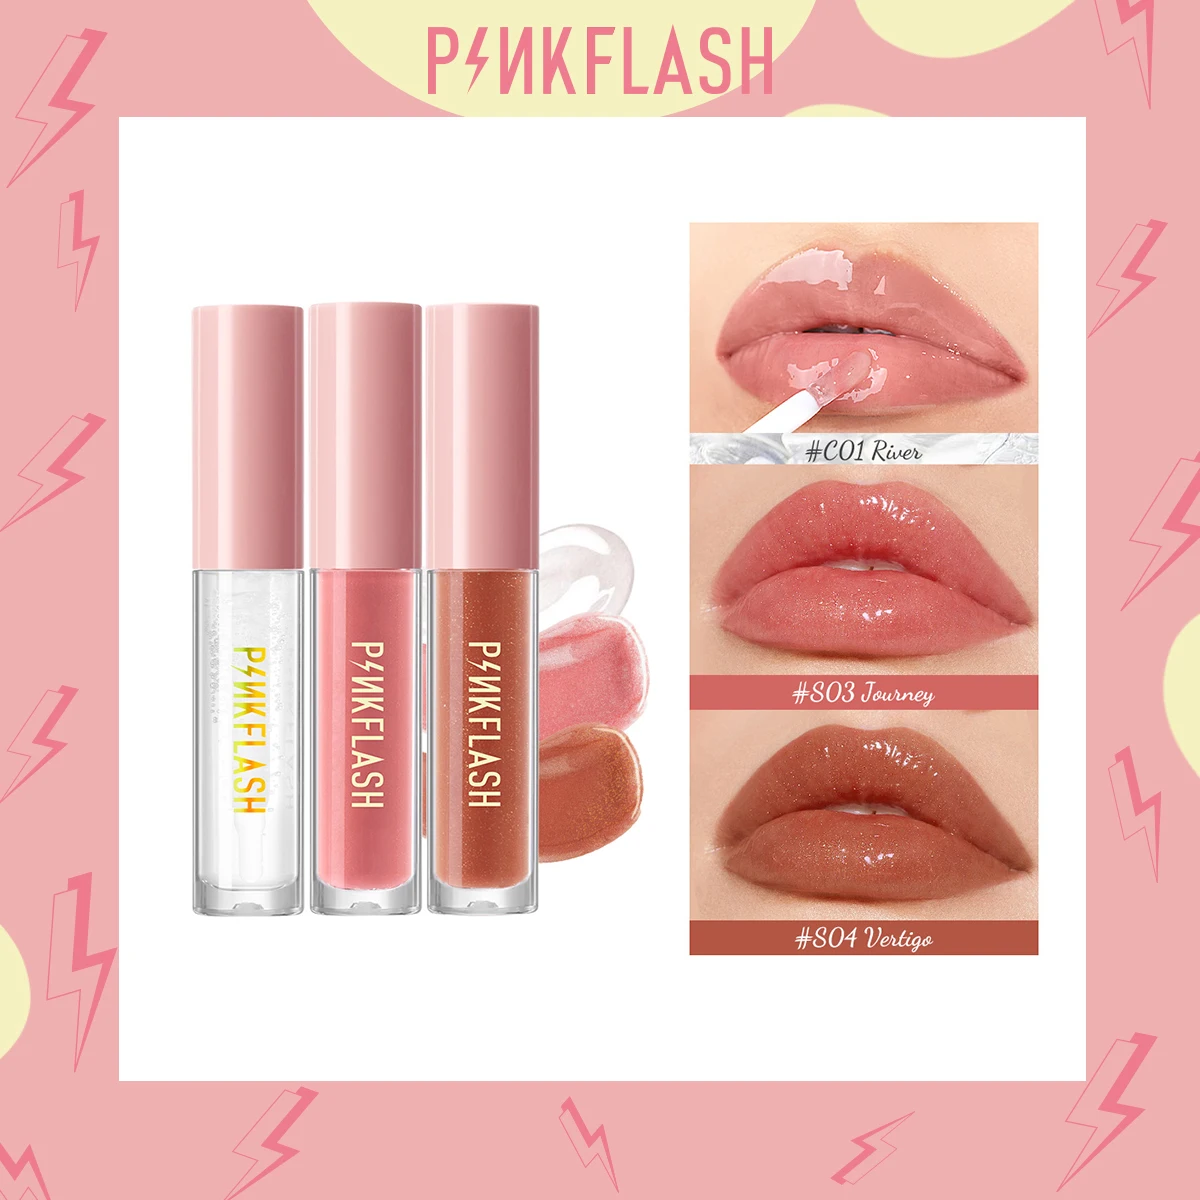 

PINKFLASH Shine and Shimmer Plumping Lip Gloss Natural Moisturizer Long-lasting Plumping Lips Balm Lip Care Makeup Cosmetics